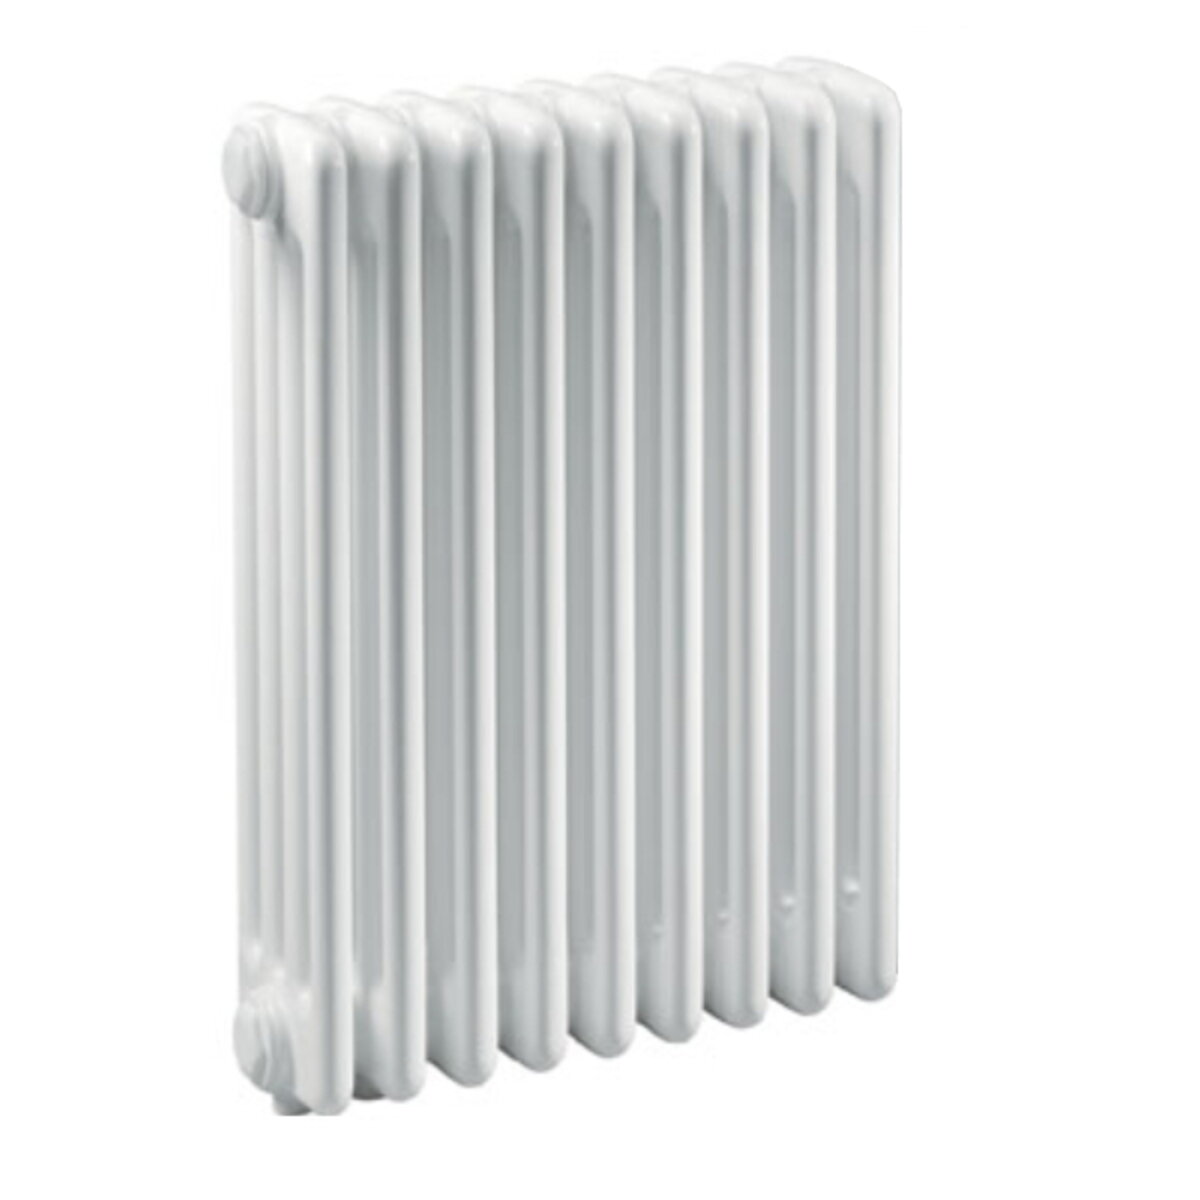 Ercos Comby steel column radiator 9 elements 3 columns center distance 800 mm